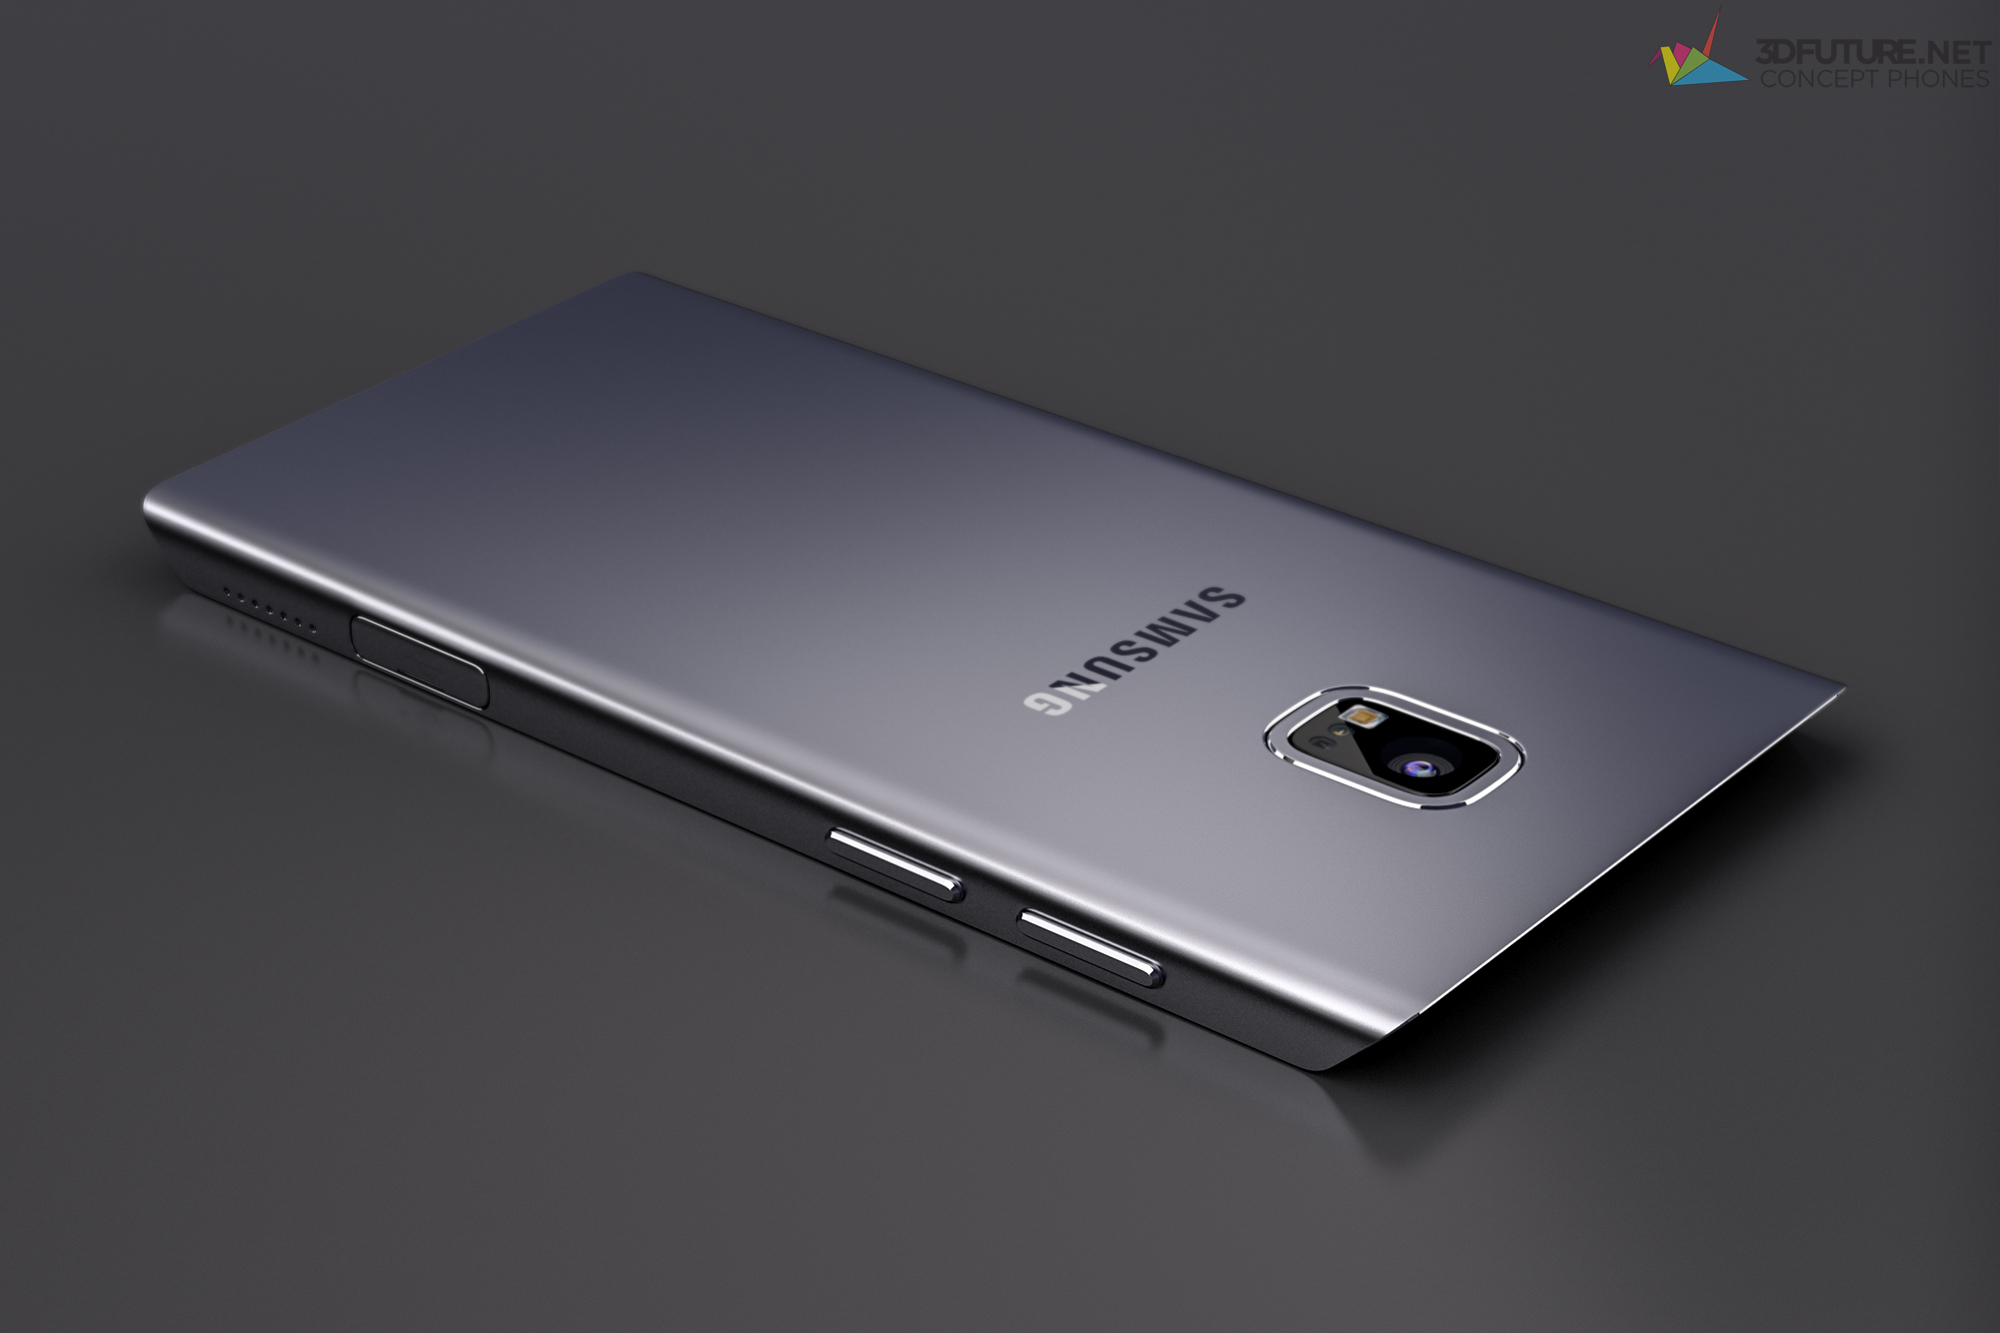 Samsung Galaxy S7 получит порт USB Type-C